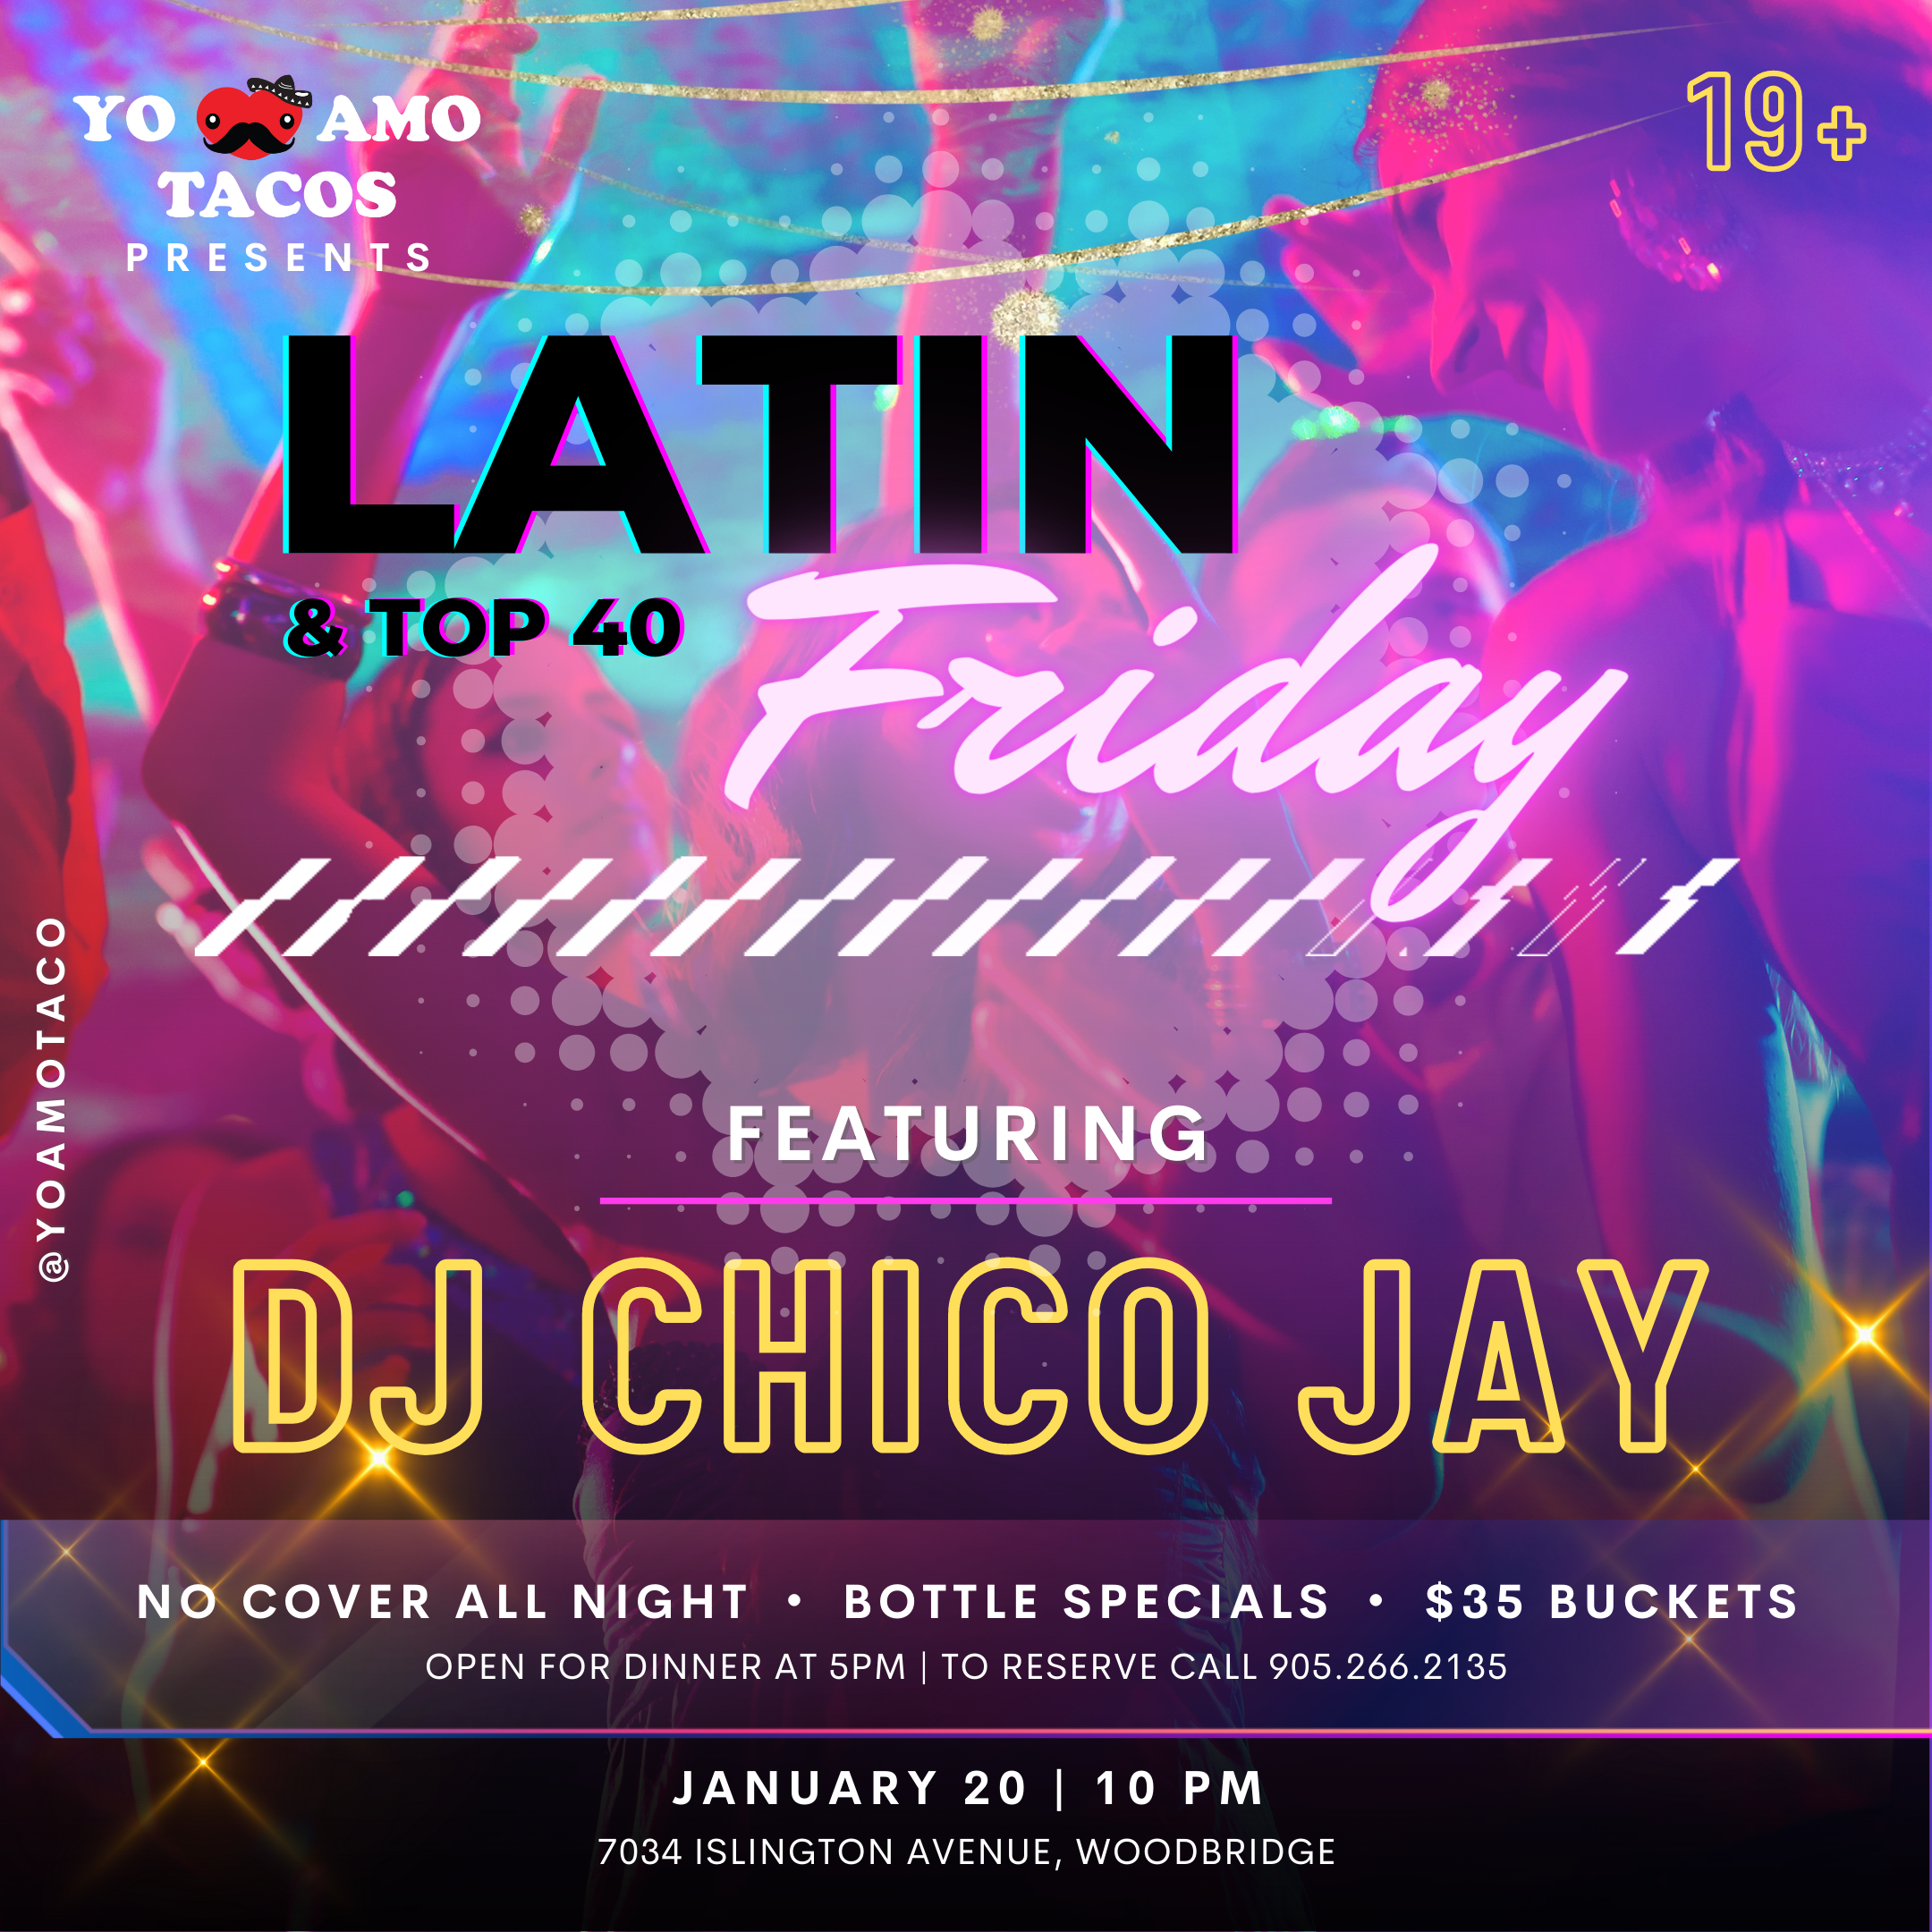 Latin & Top 40 Friday